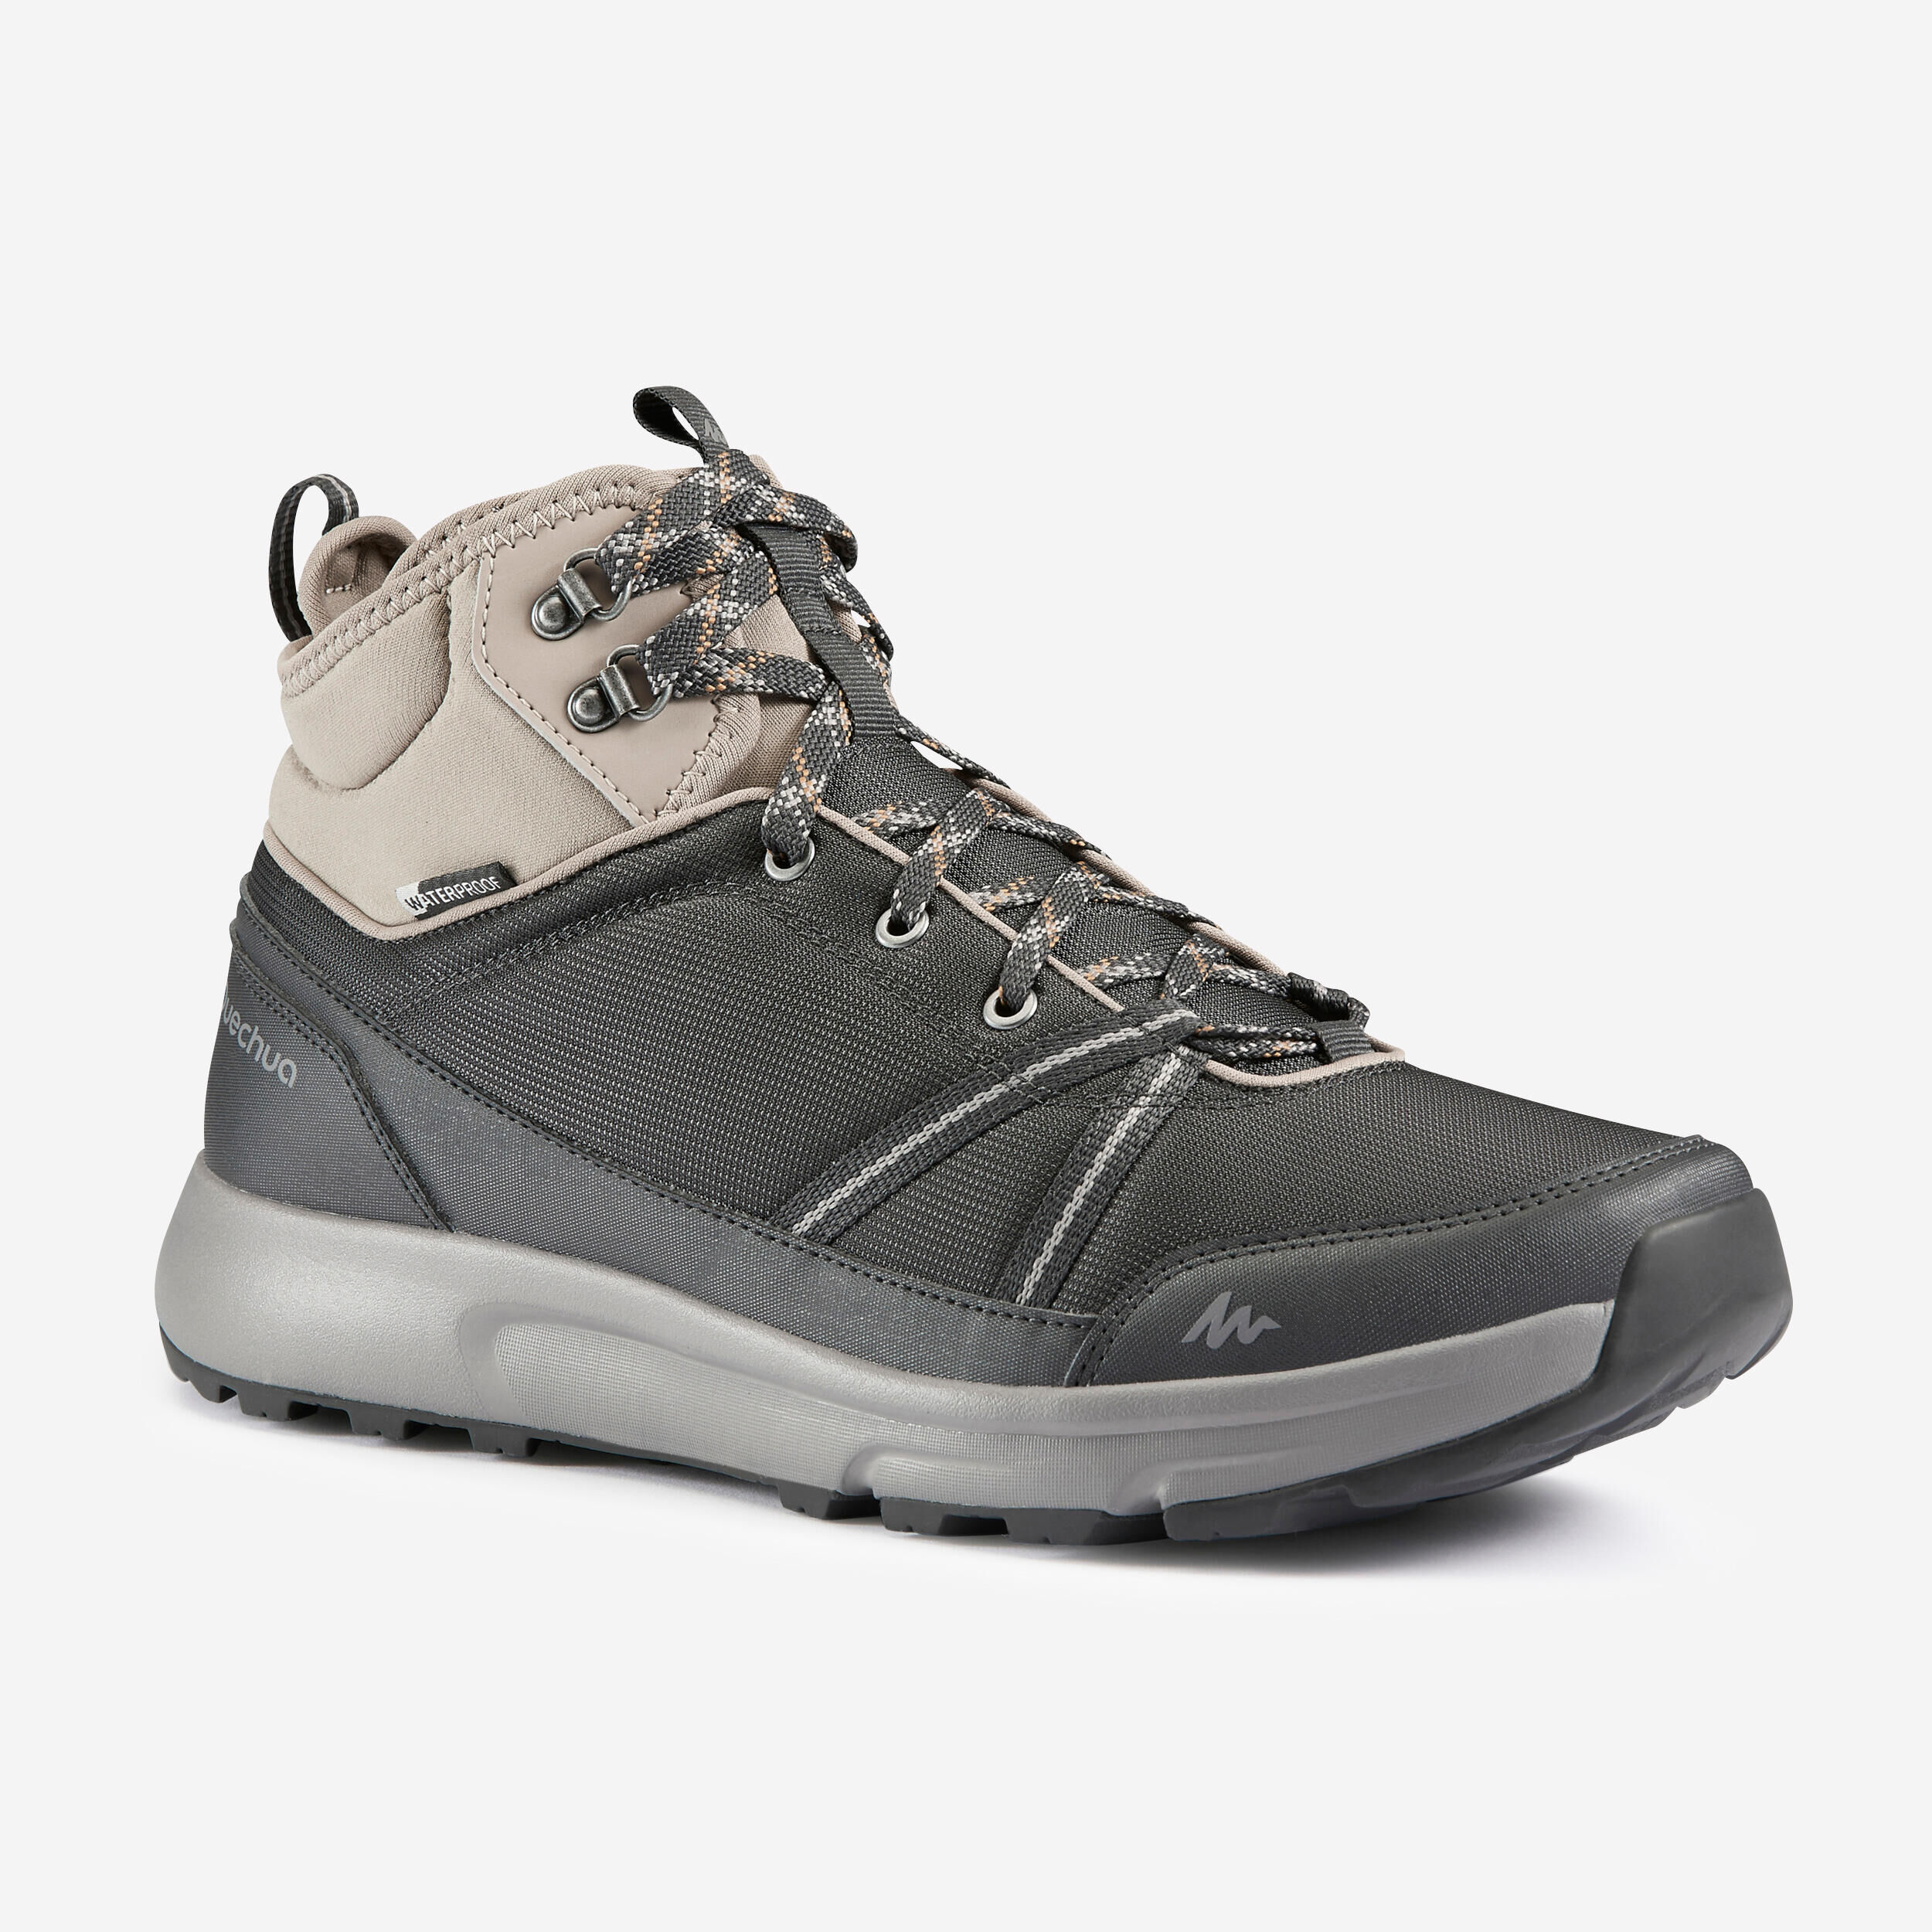 QUECHUA Men’s Waterproof Hiking Shoes  - NH100 Mid WP